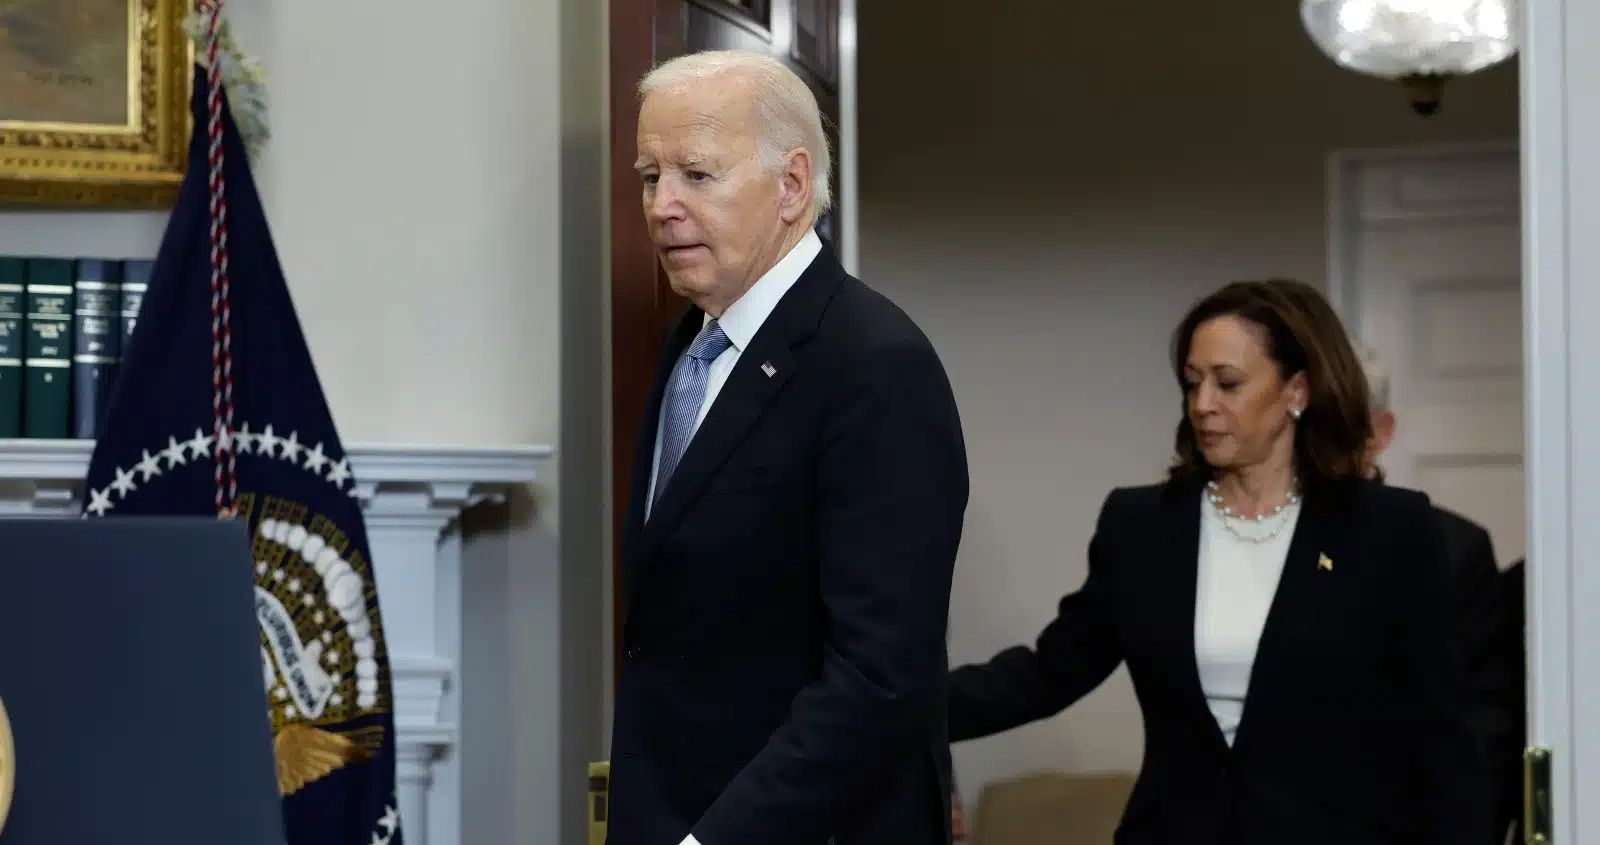 Biden Insider Says Campaign Situation Looking ‘Bleak’: Report